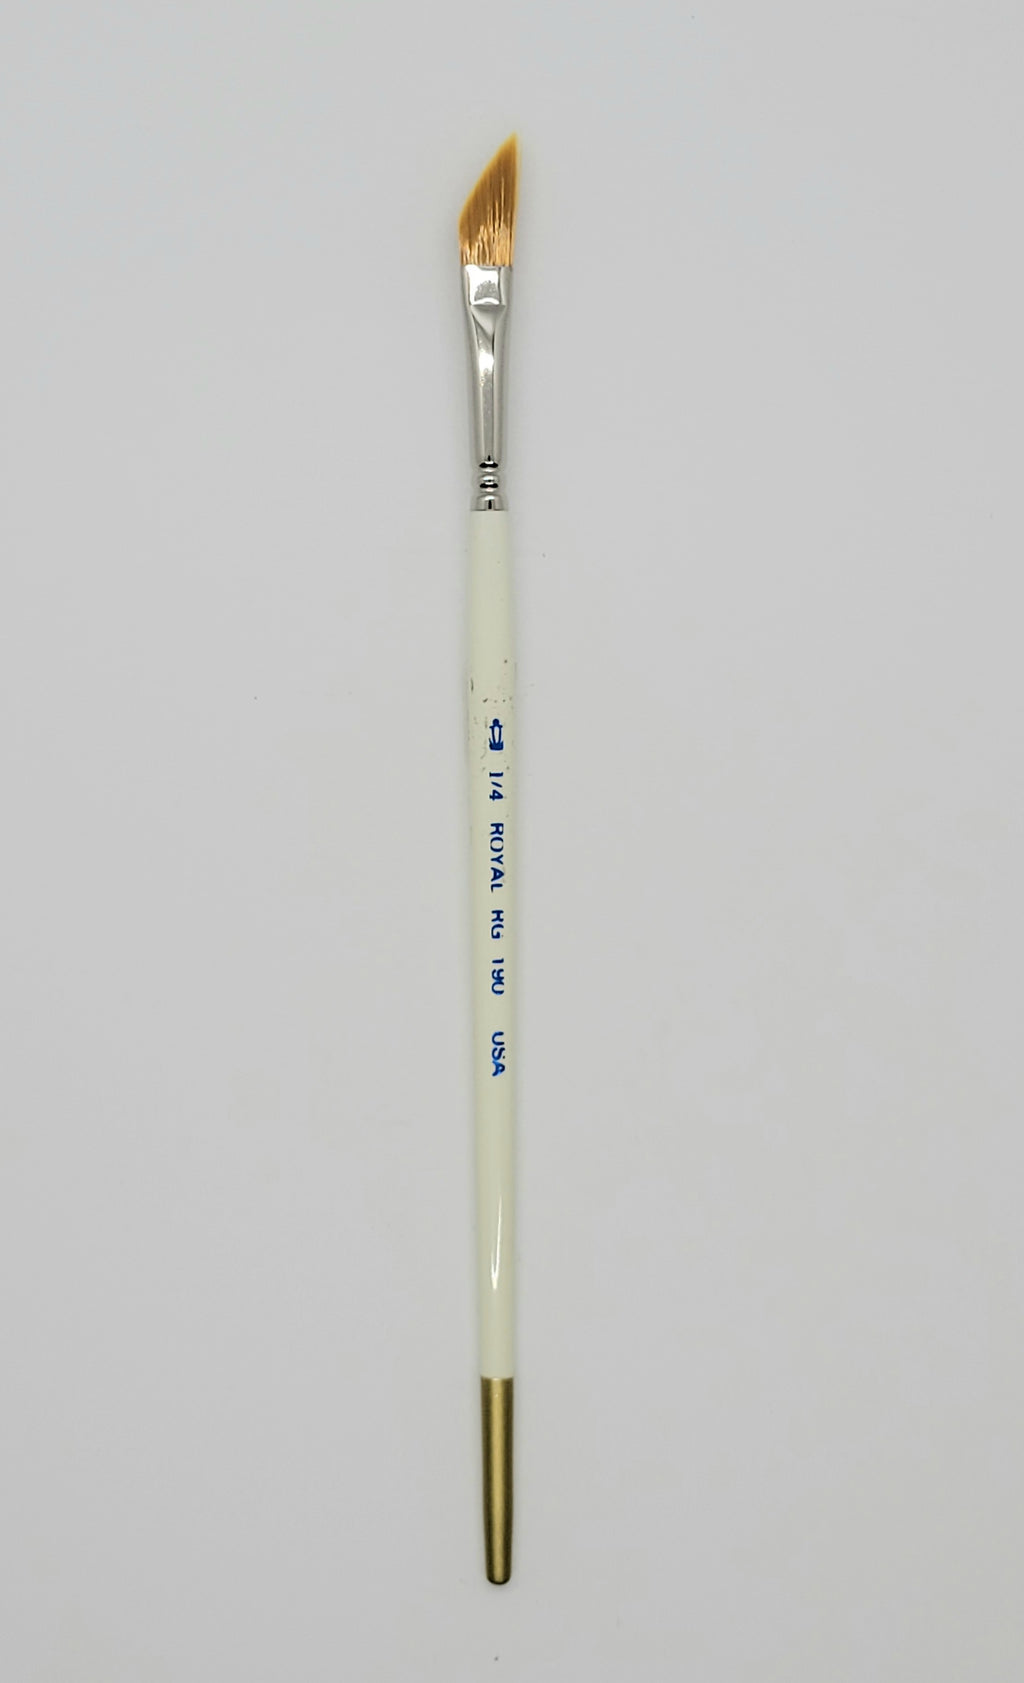 190 Dagger Striper, Royal Gold Brush by Royal & Langnickle